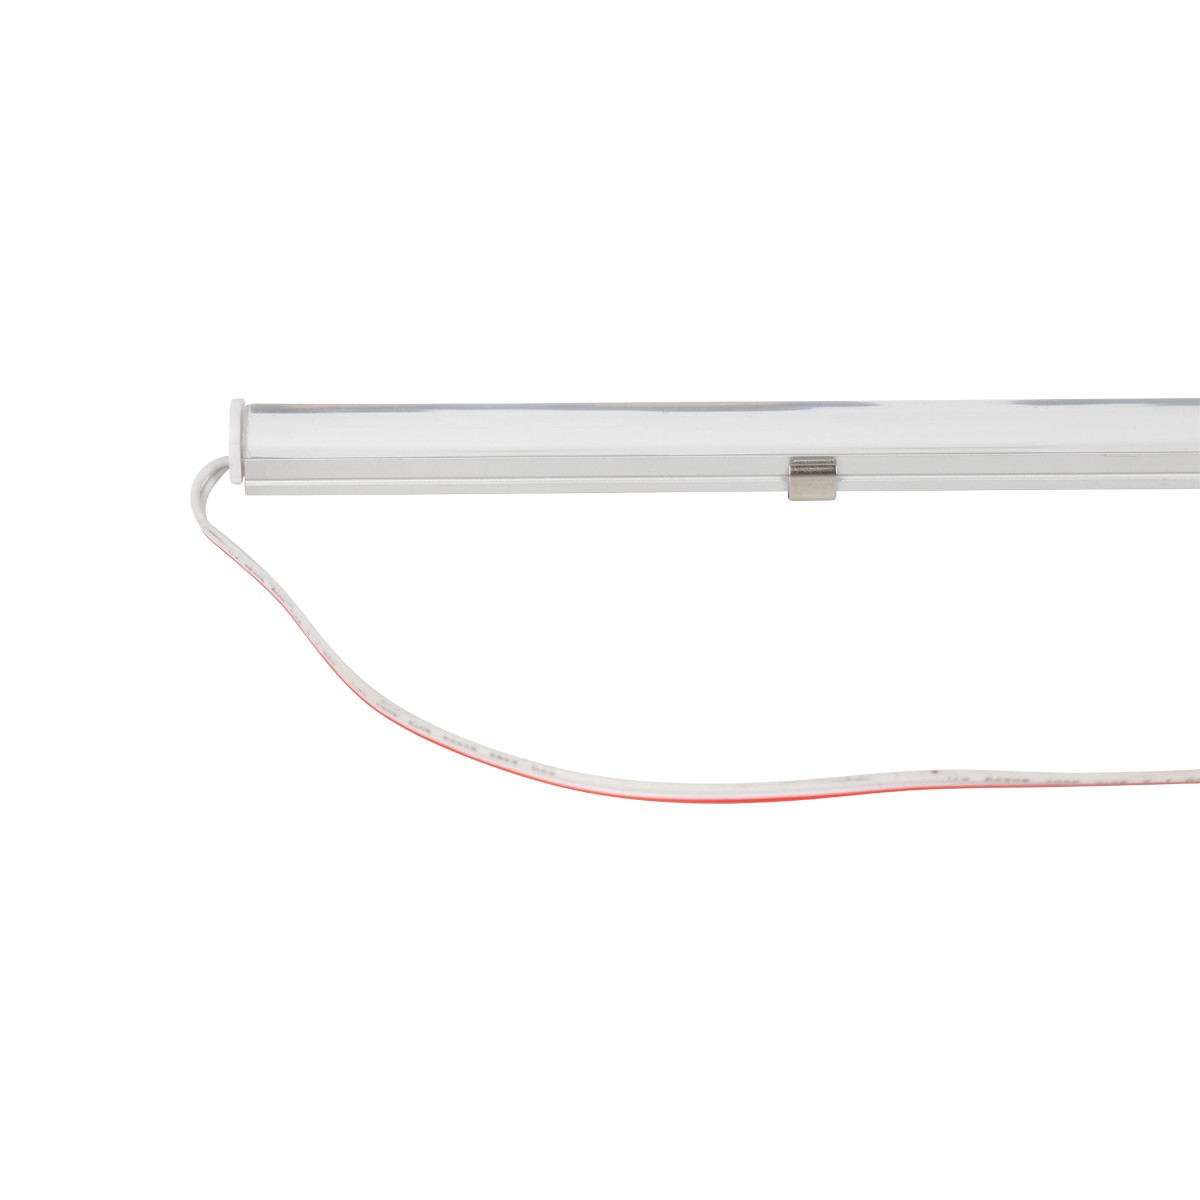 LED rigid light bar for UV sterilization and disinfection 270nm disinfection cabinet to disinfect LE